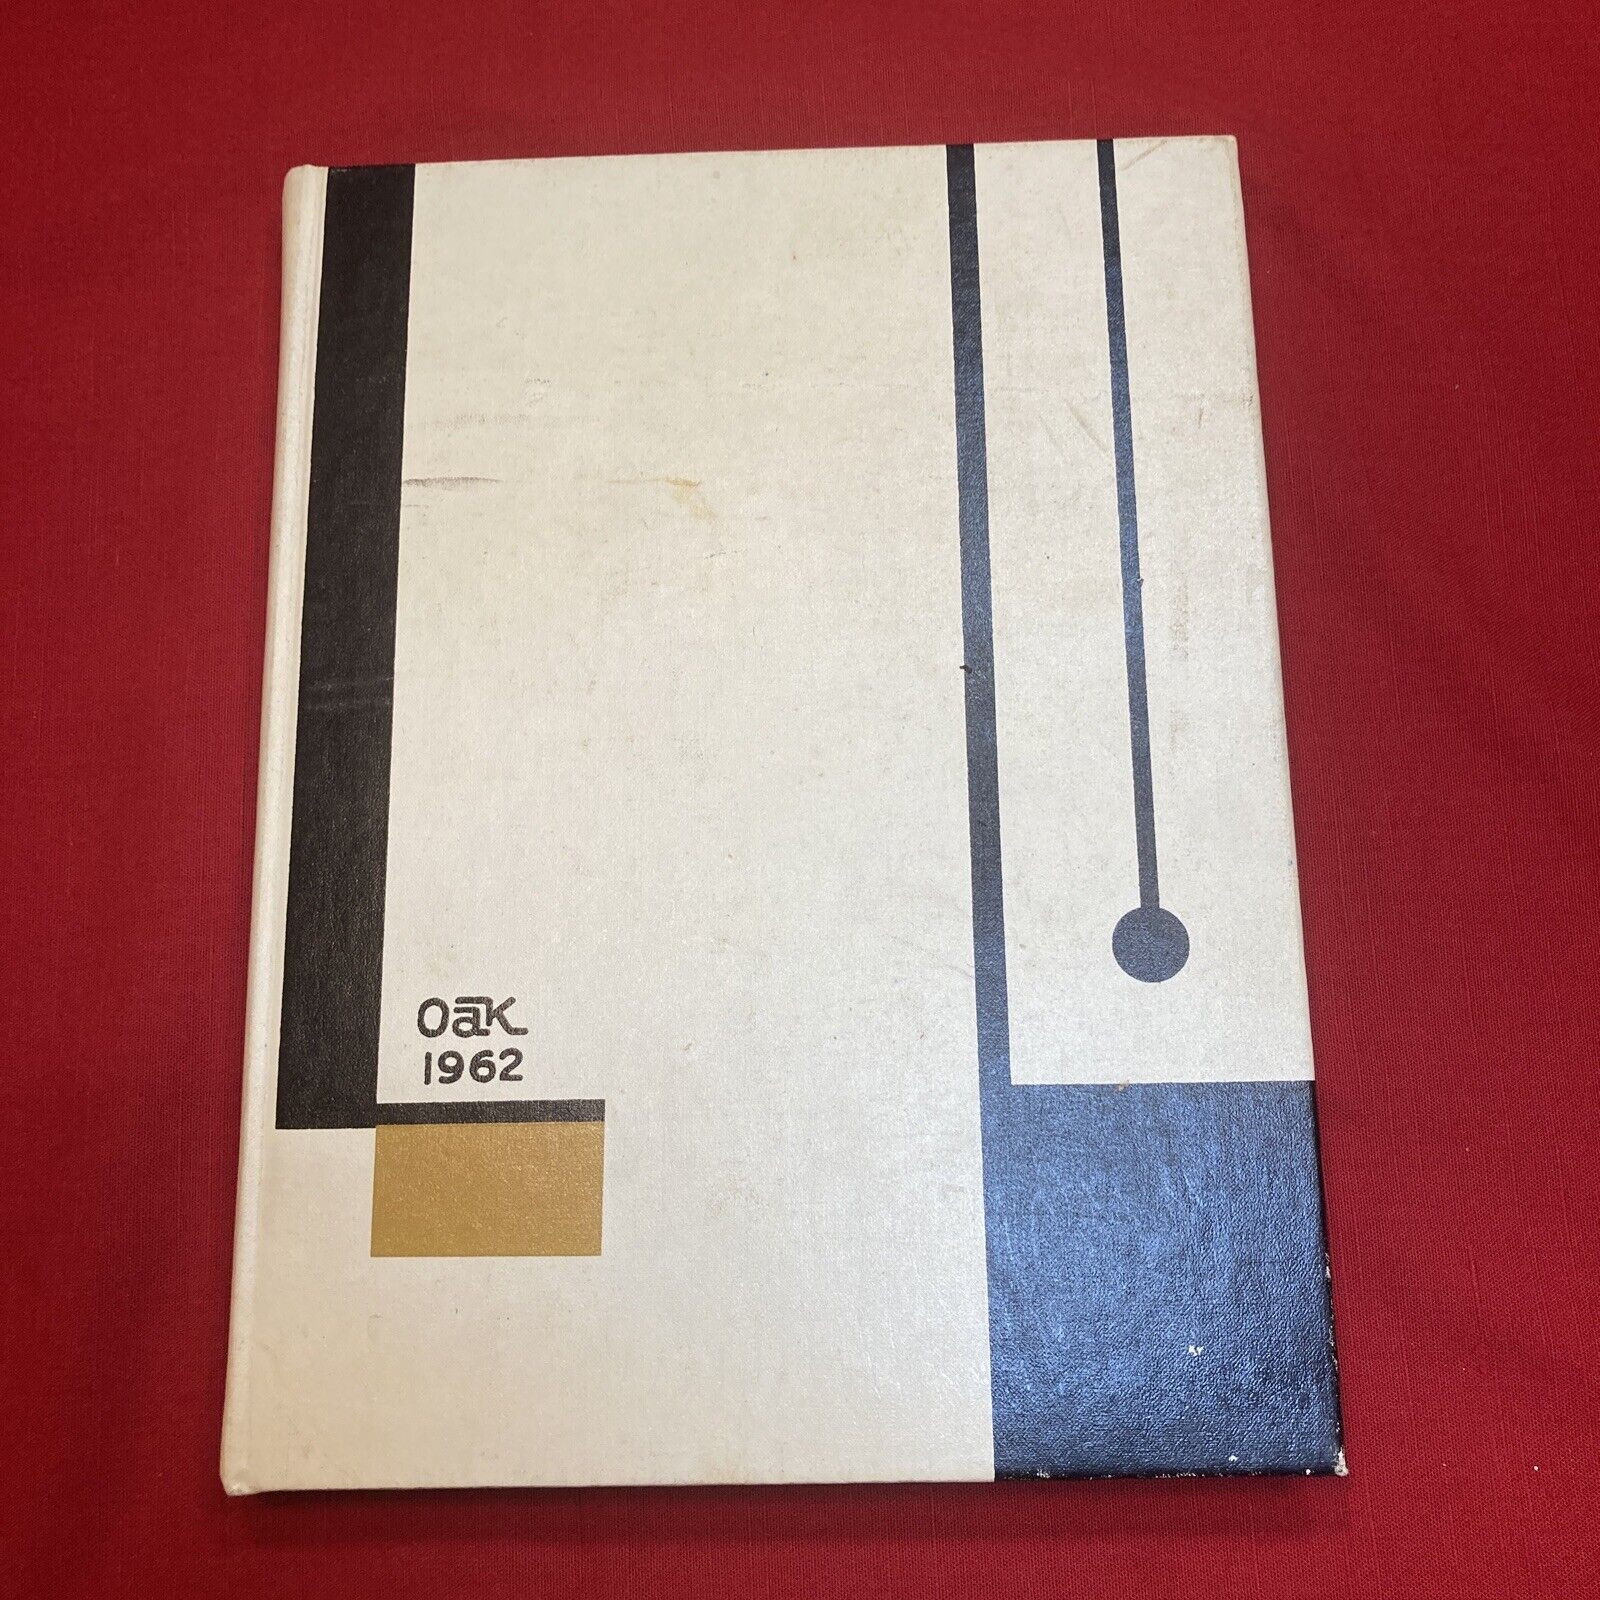 glassboro State College 1962 yearbook. “Oak“. Rowan University. Glassboro NJ